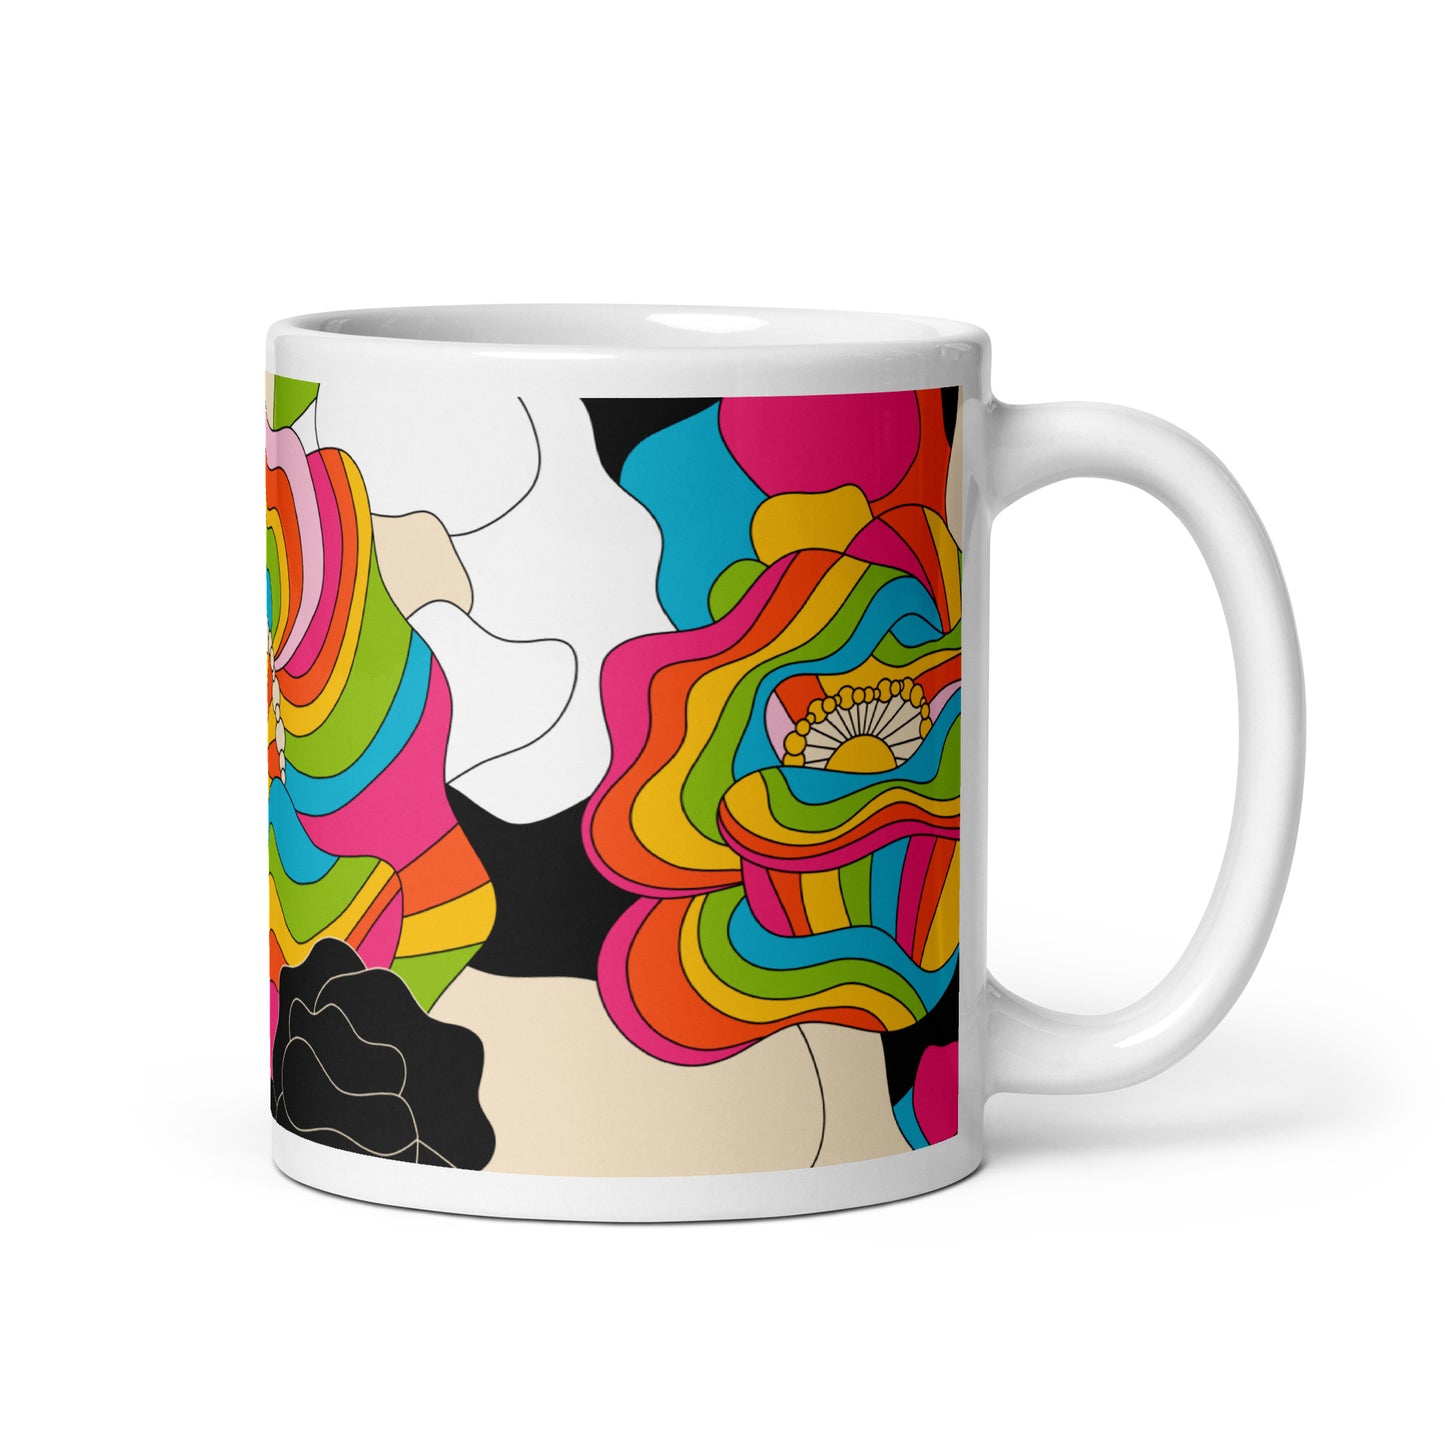 RAINBOW POPPY - Ceramic Mug